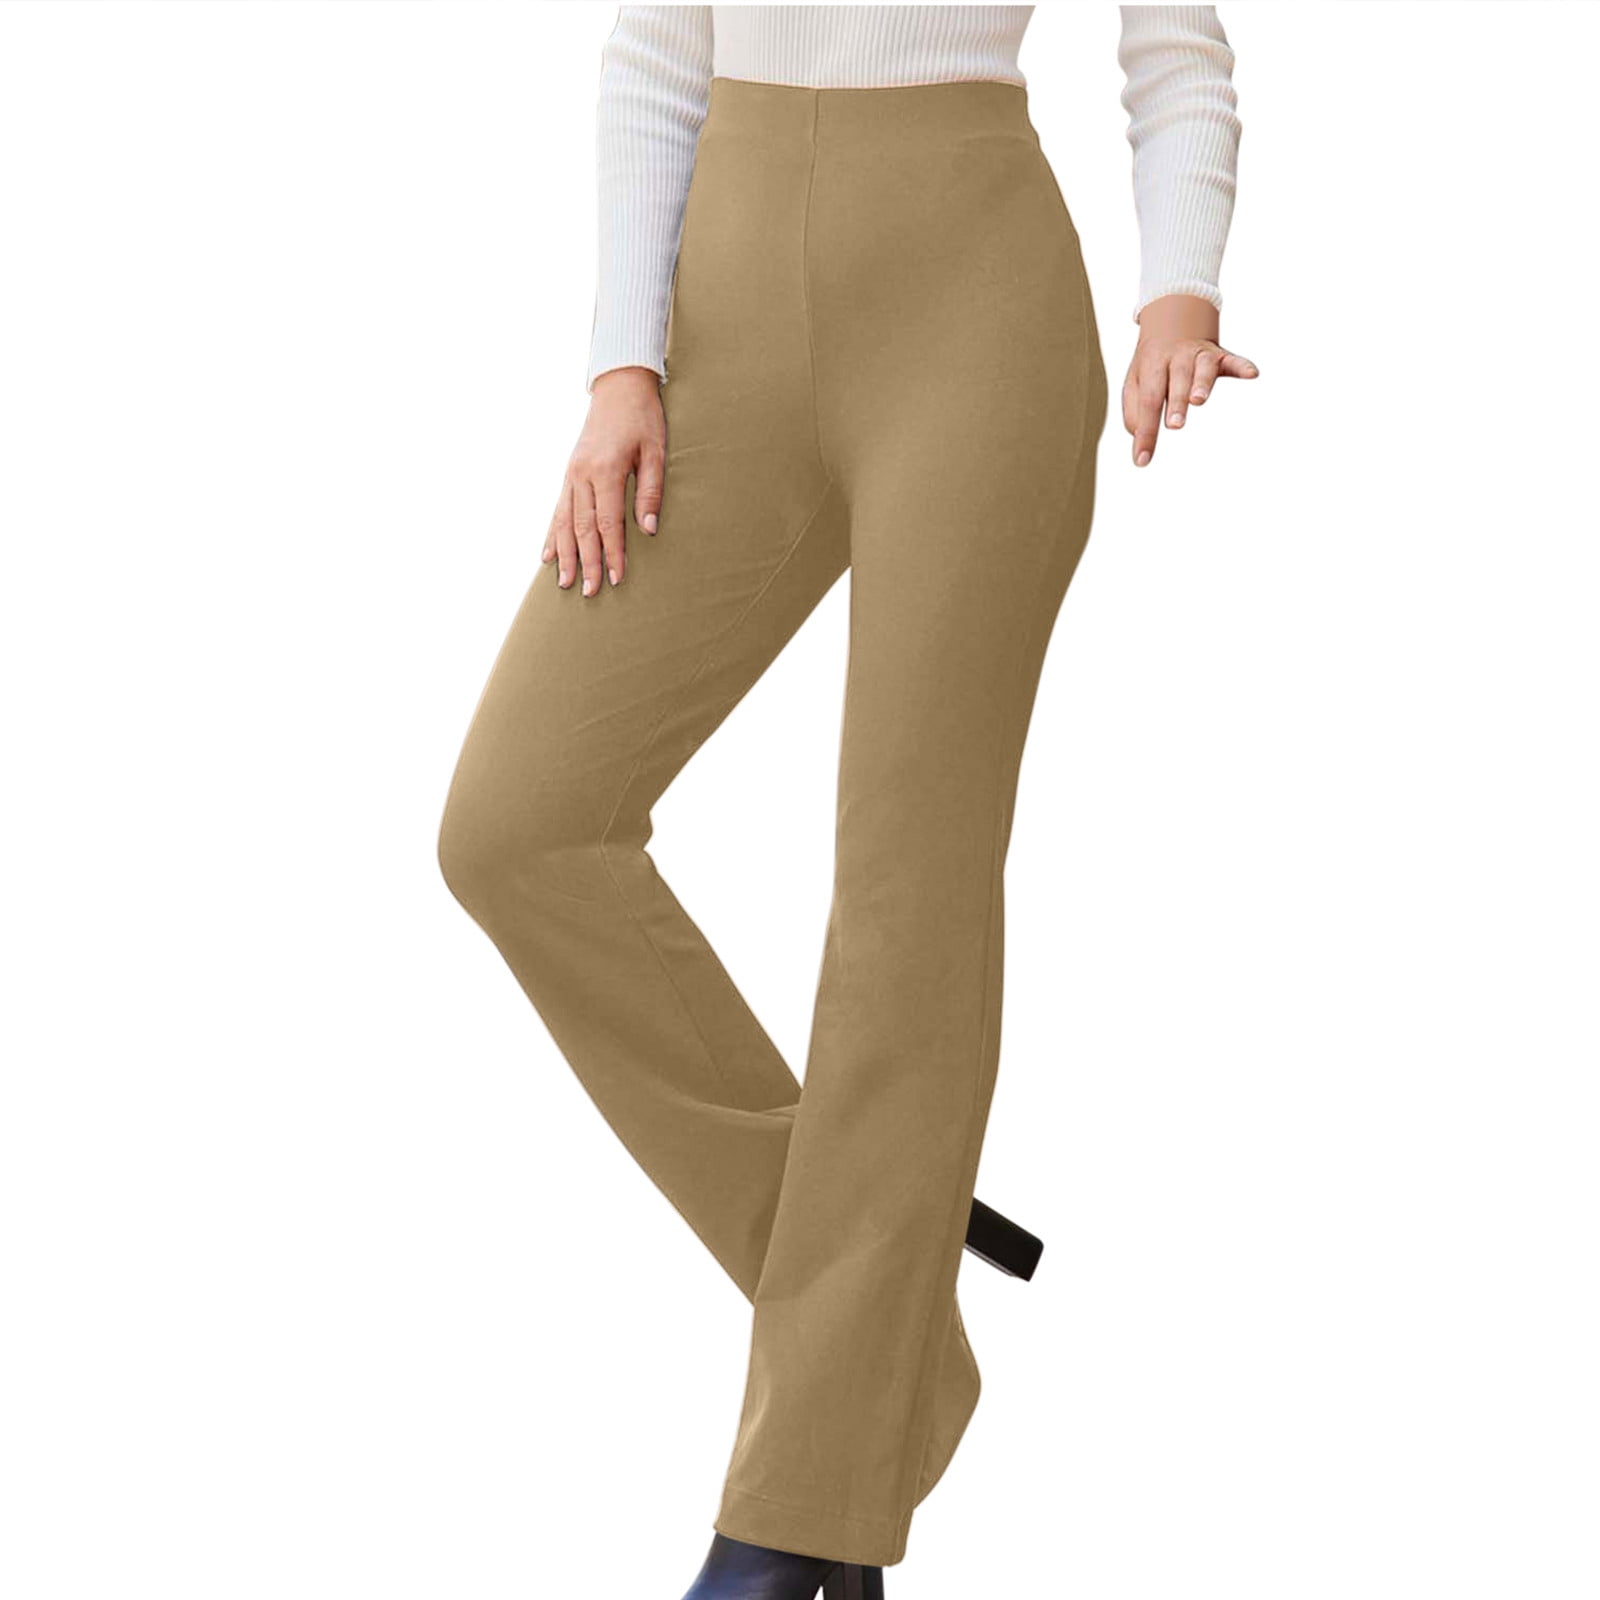 Mrat Full Length Pants Leggings Outfits For Women Pants Fashion